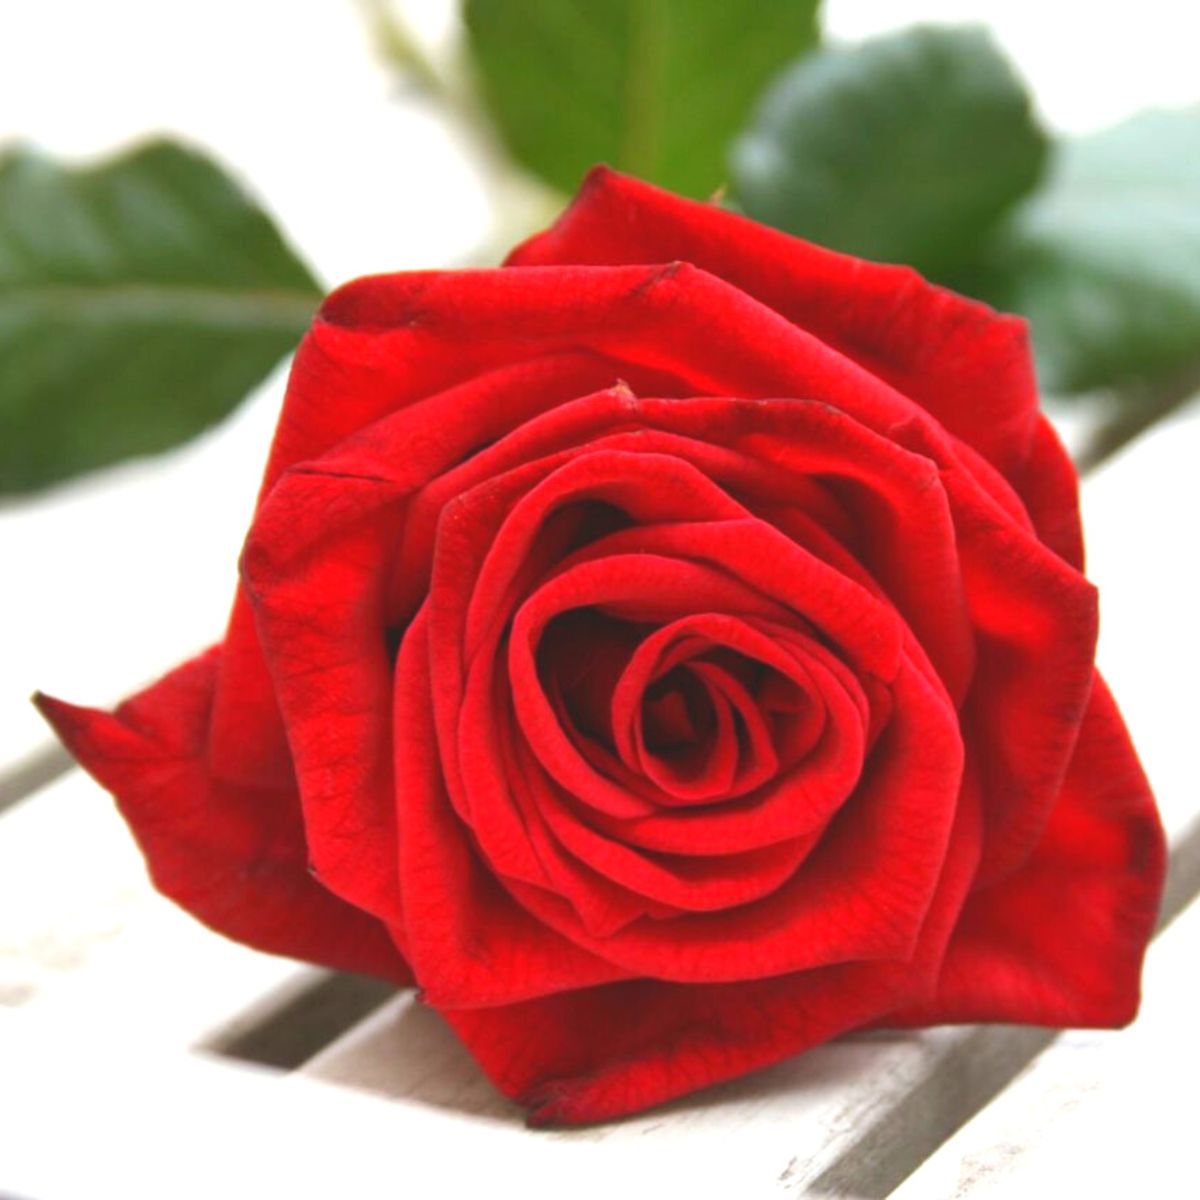 Roses are red poem- on Thursd 